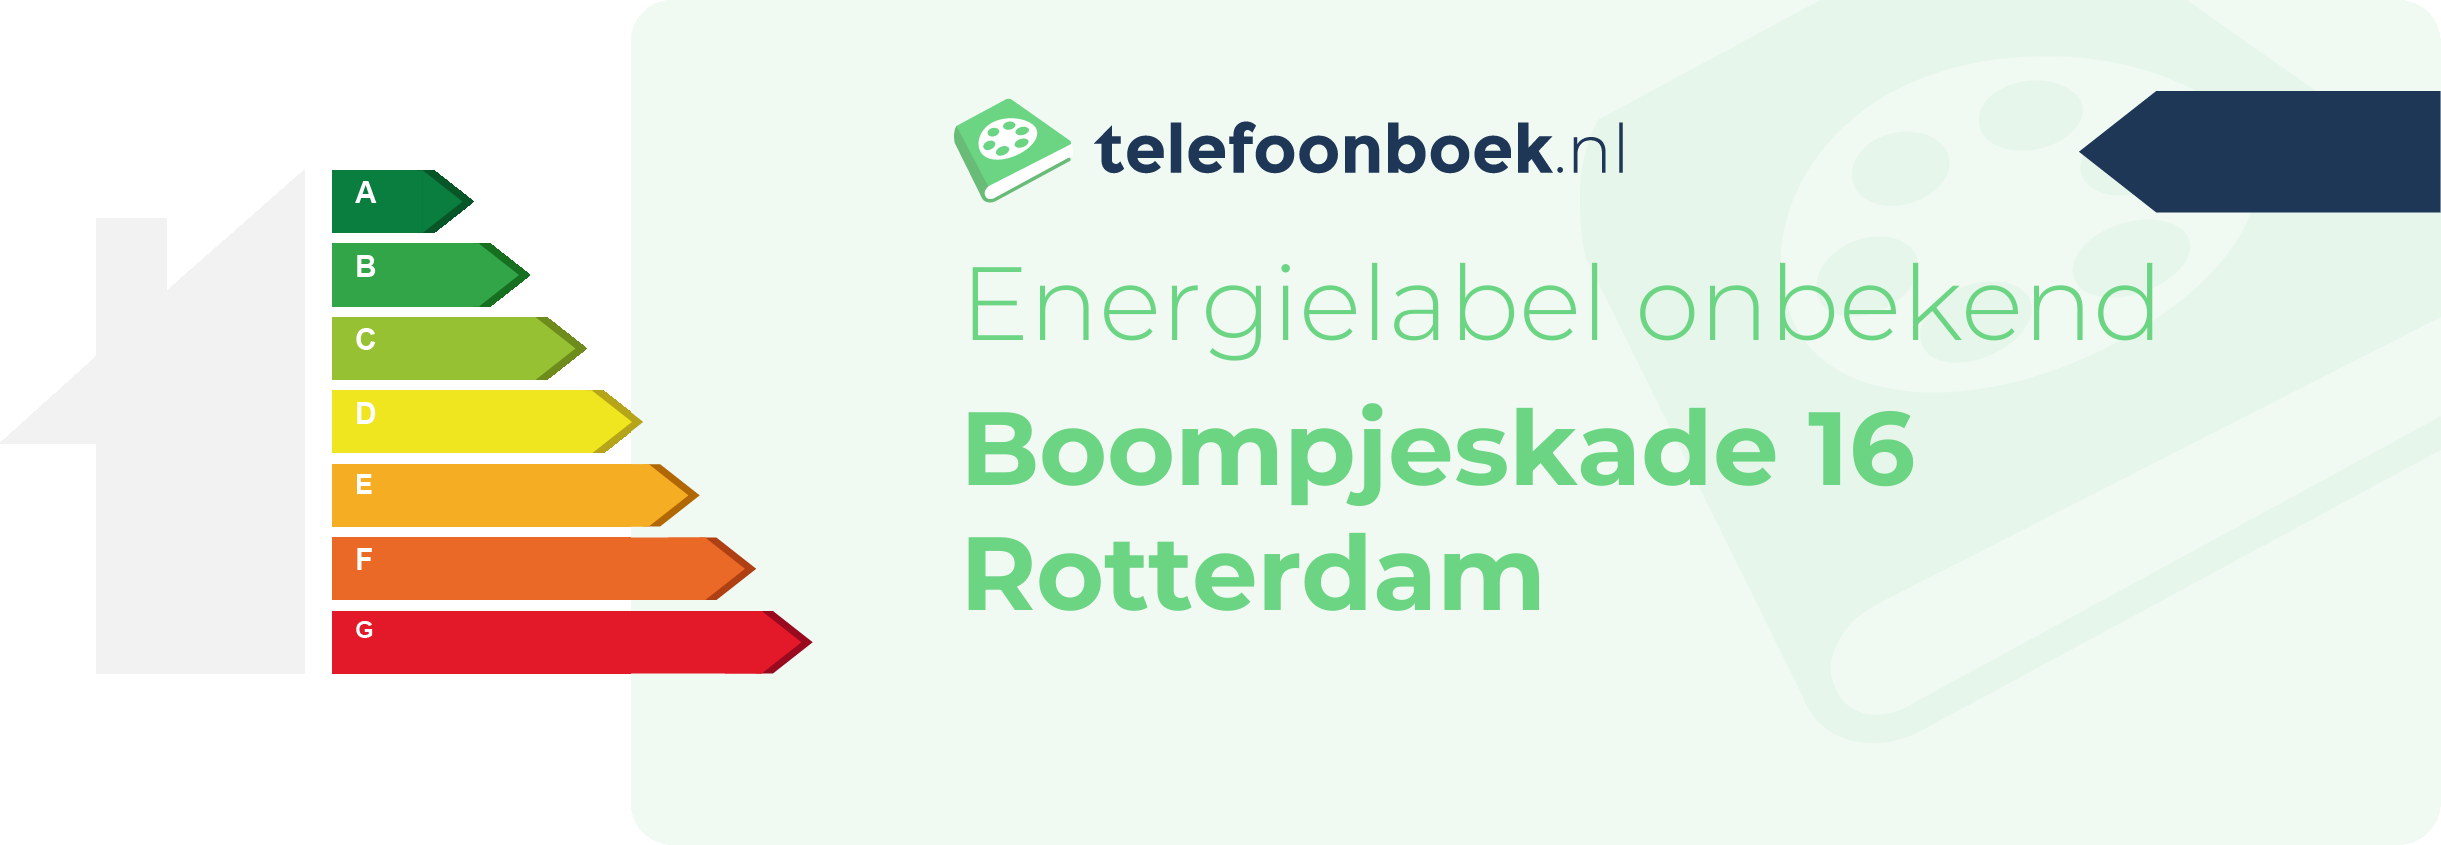 Energielabel Boompjeskade 16 Rotterdam